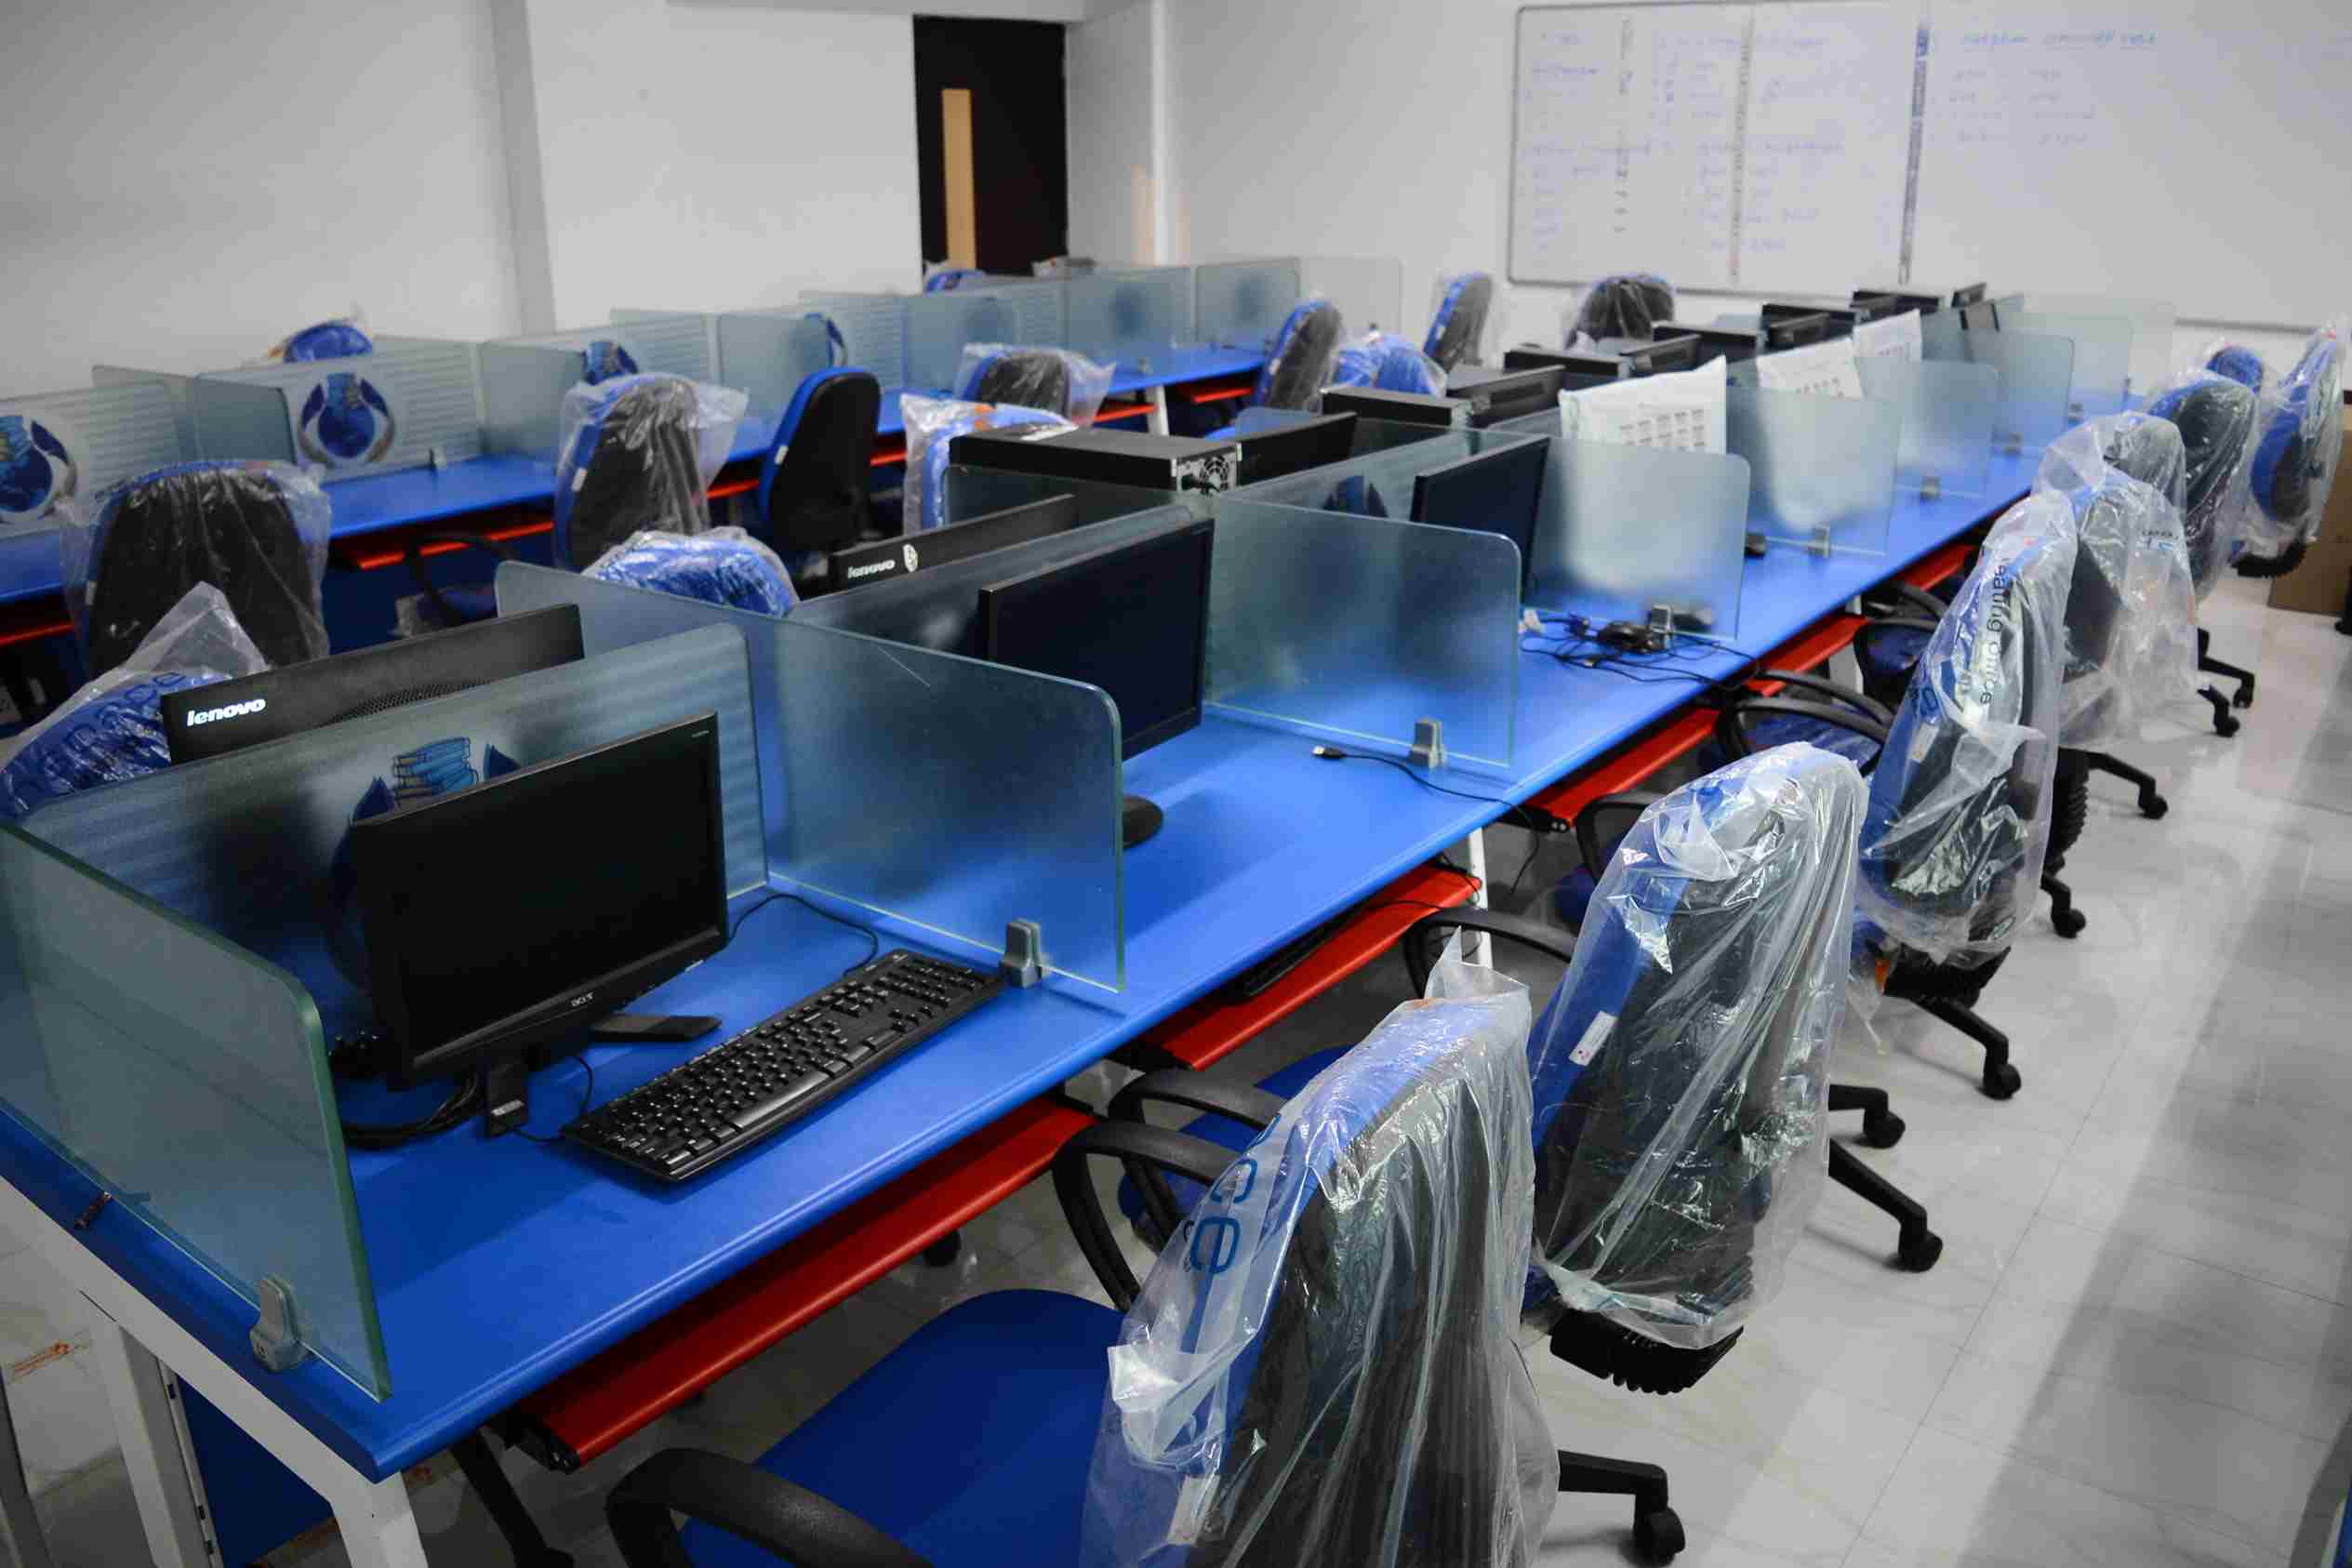 Computer Lab at RISHS International School Arcot